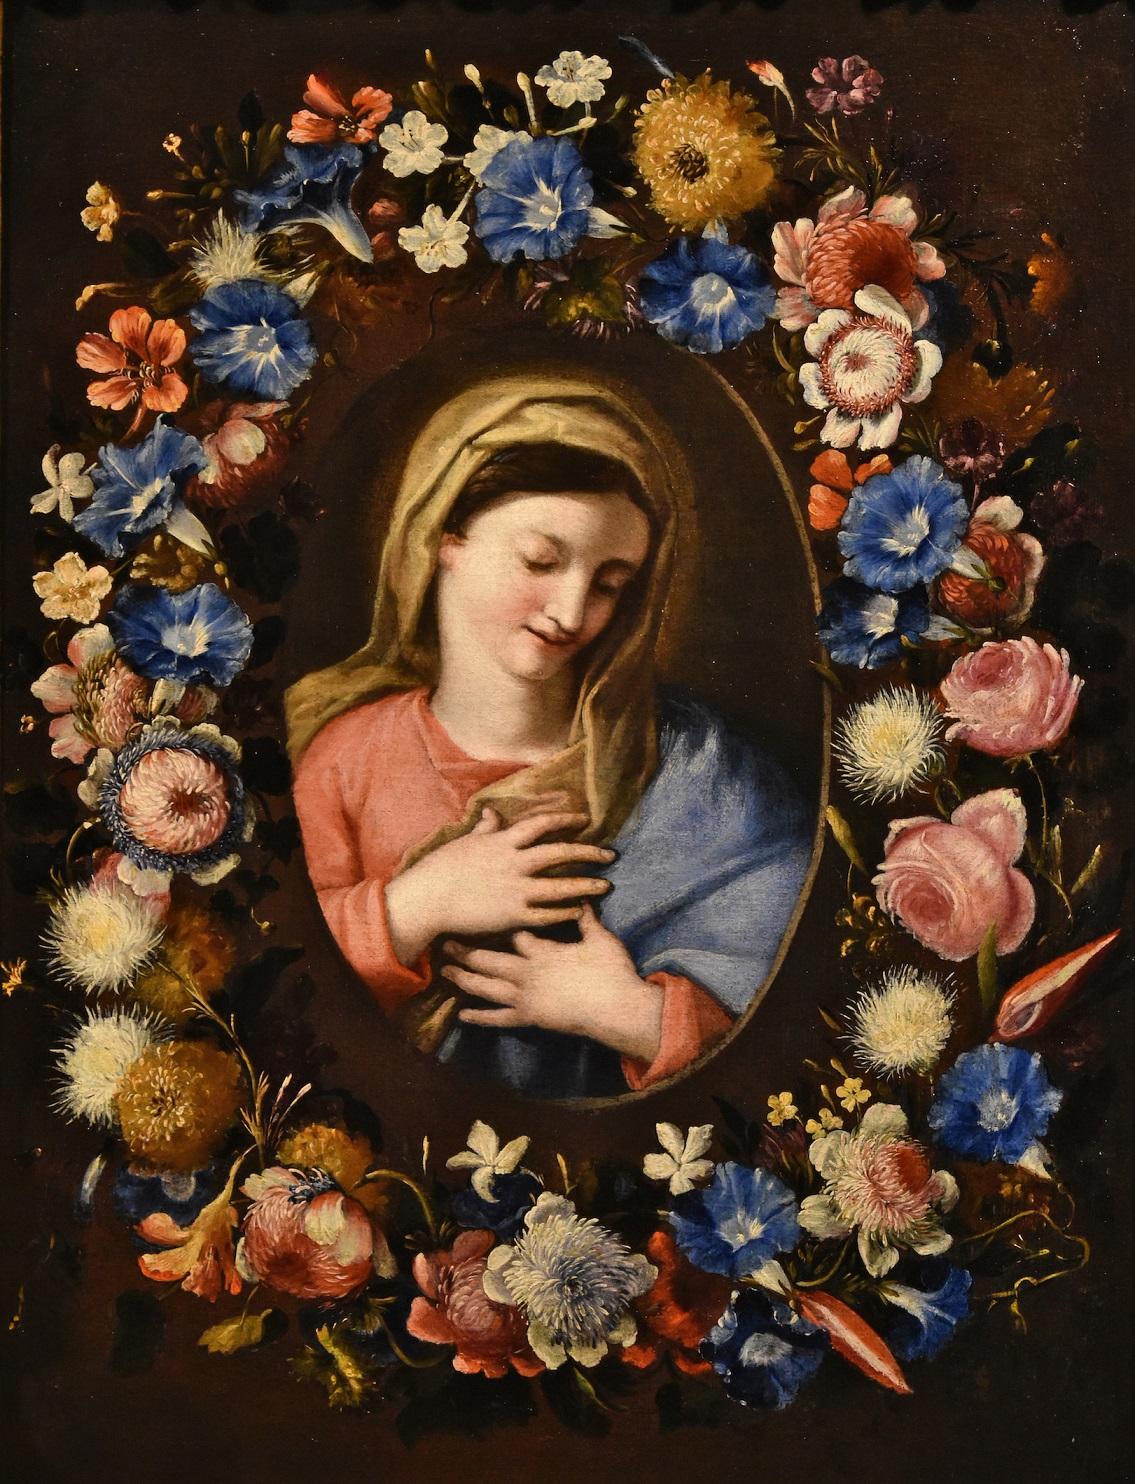 Flower Still-life Virgin Trevisani Stanchi Paint Oil on canvas 17/18th Century - Painting by Francesco Trevisani (Capodistria 1656 - Rome 1746) 